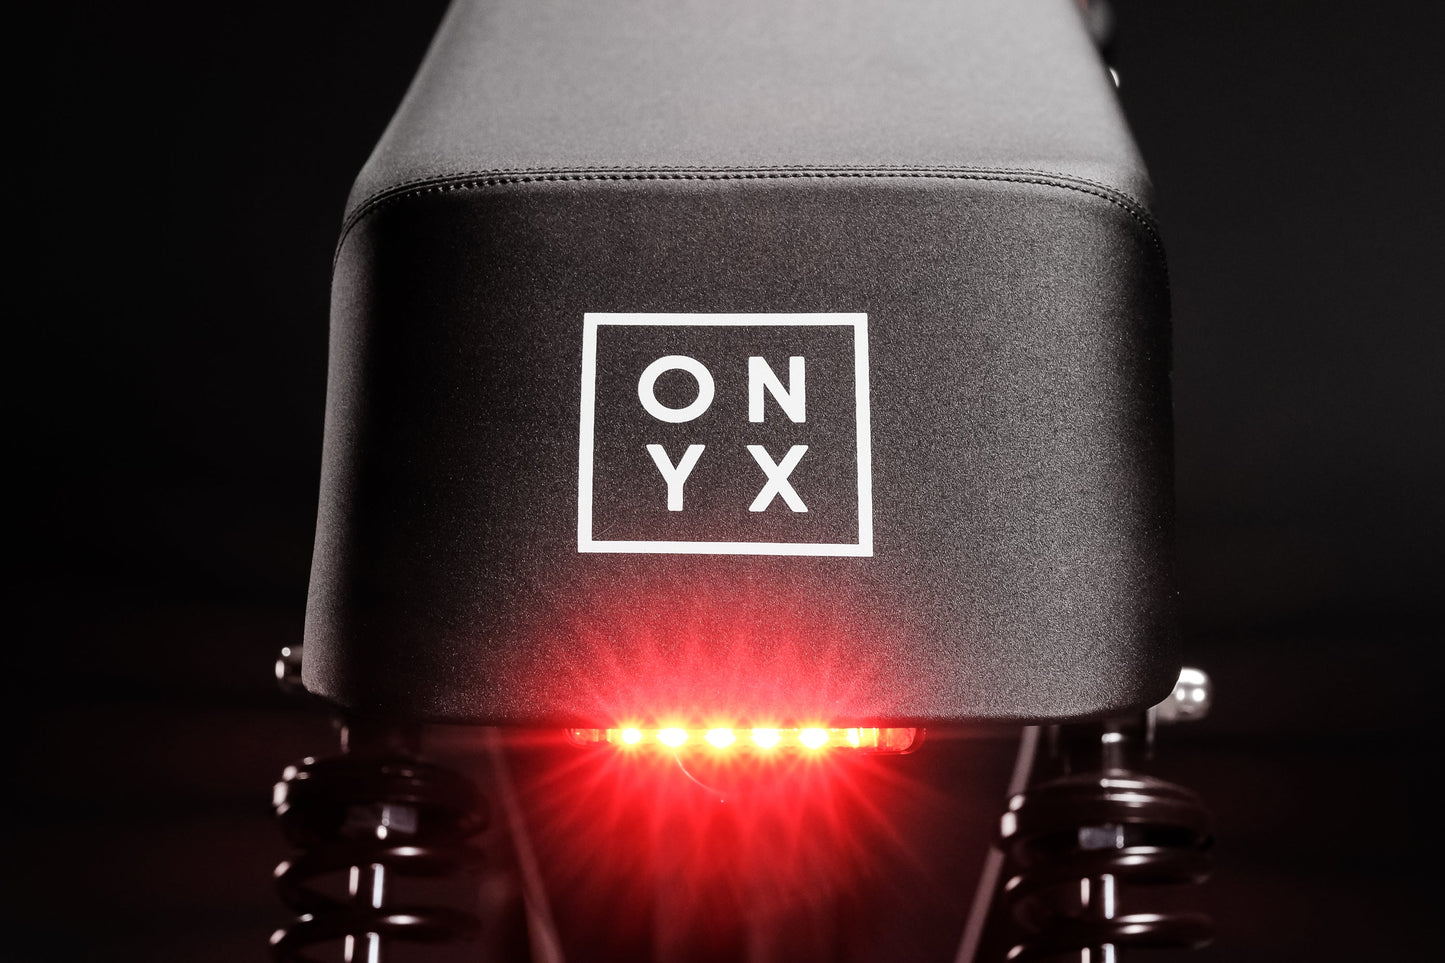 ONYX RCR 84V ELECTRIC MOTORBIKE